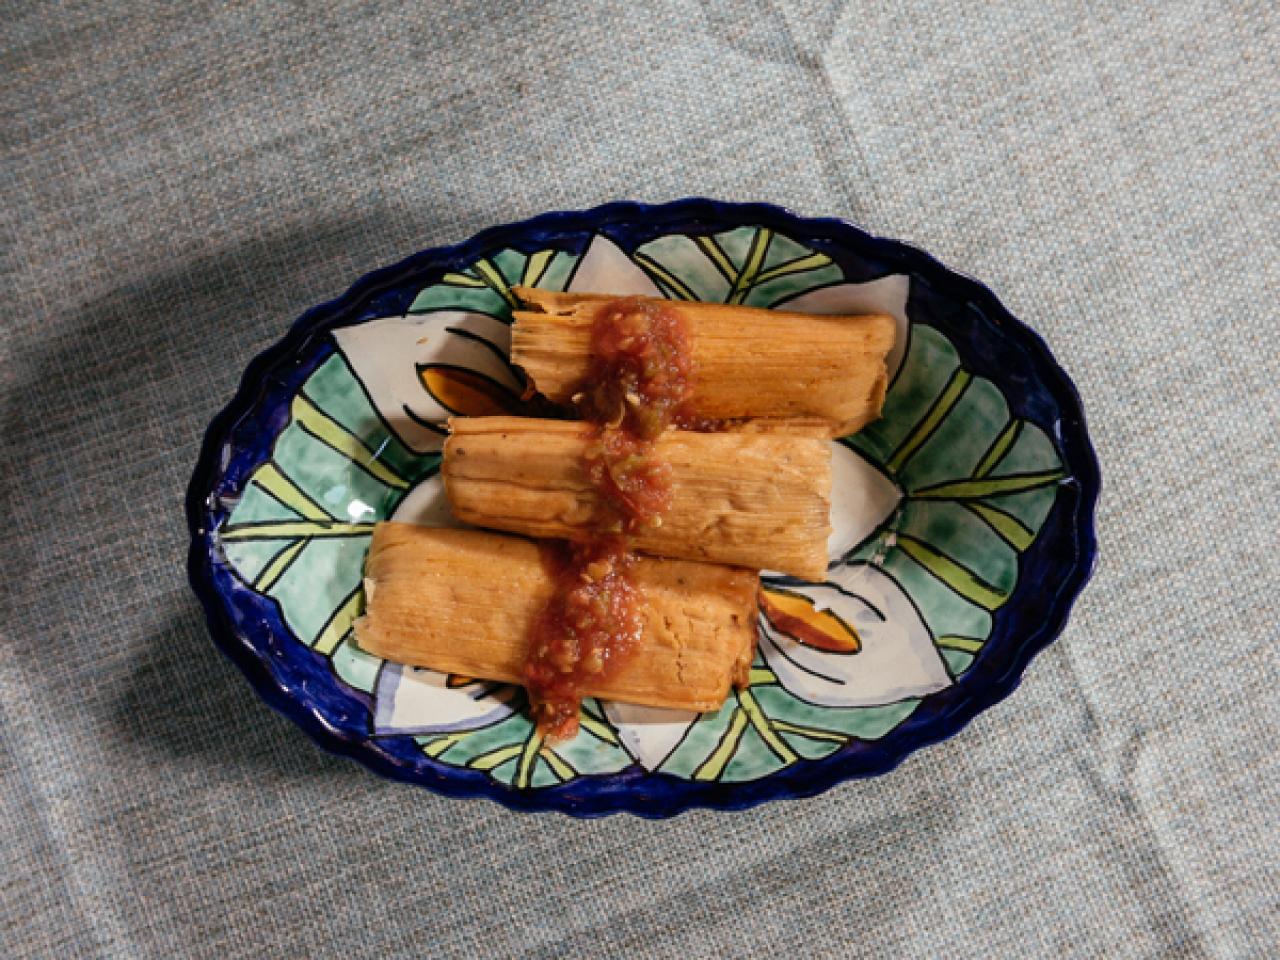 https://food.fnr.sndimg.com/content/dam/images/food/fullset/2021/10/21/FN_tia-chitas-traditional-mexican-pork-tamales-maria-de-jesus-aguirre-tia-chita_s4x3.jpg.rend.hgtvcom.1280.960.suffix/1634839087306.jpeg